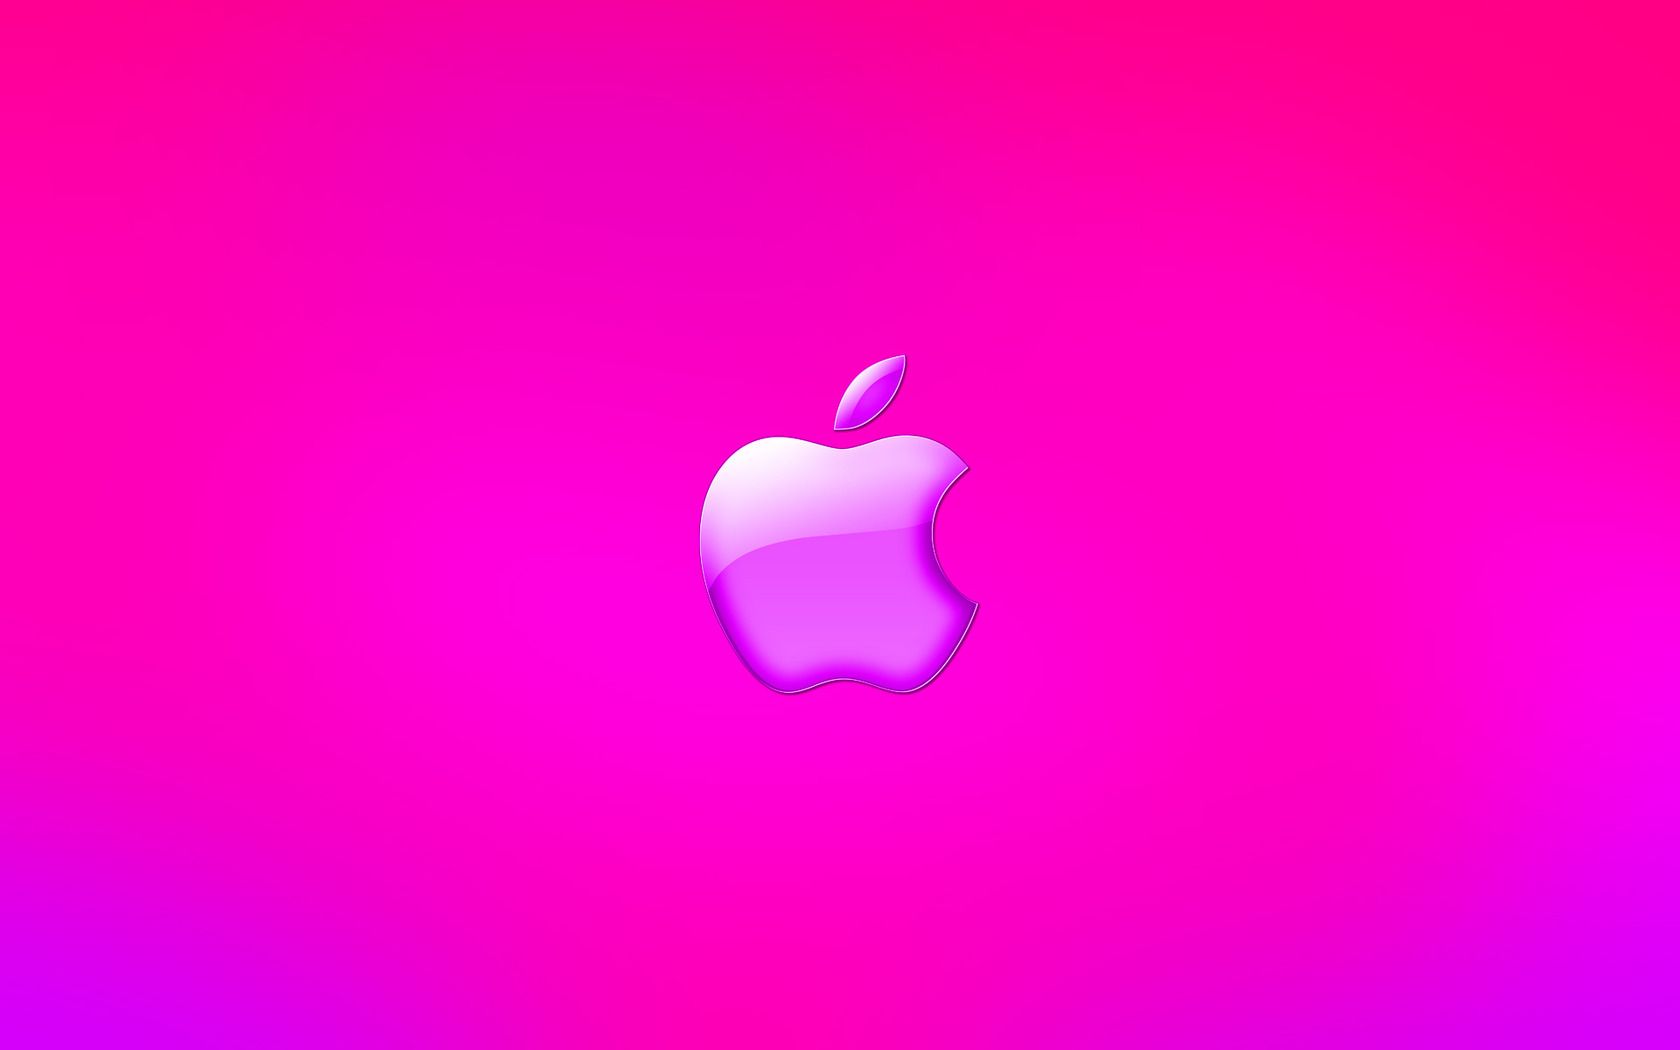 Apple Rosa Hintergrundbild 1680x1050. Apple Wallpaper Pink Wallpaper For Android Sdeerwallpaper. Apple logo wallpaper, Apple wallpaper, Apple wallpaper iphone